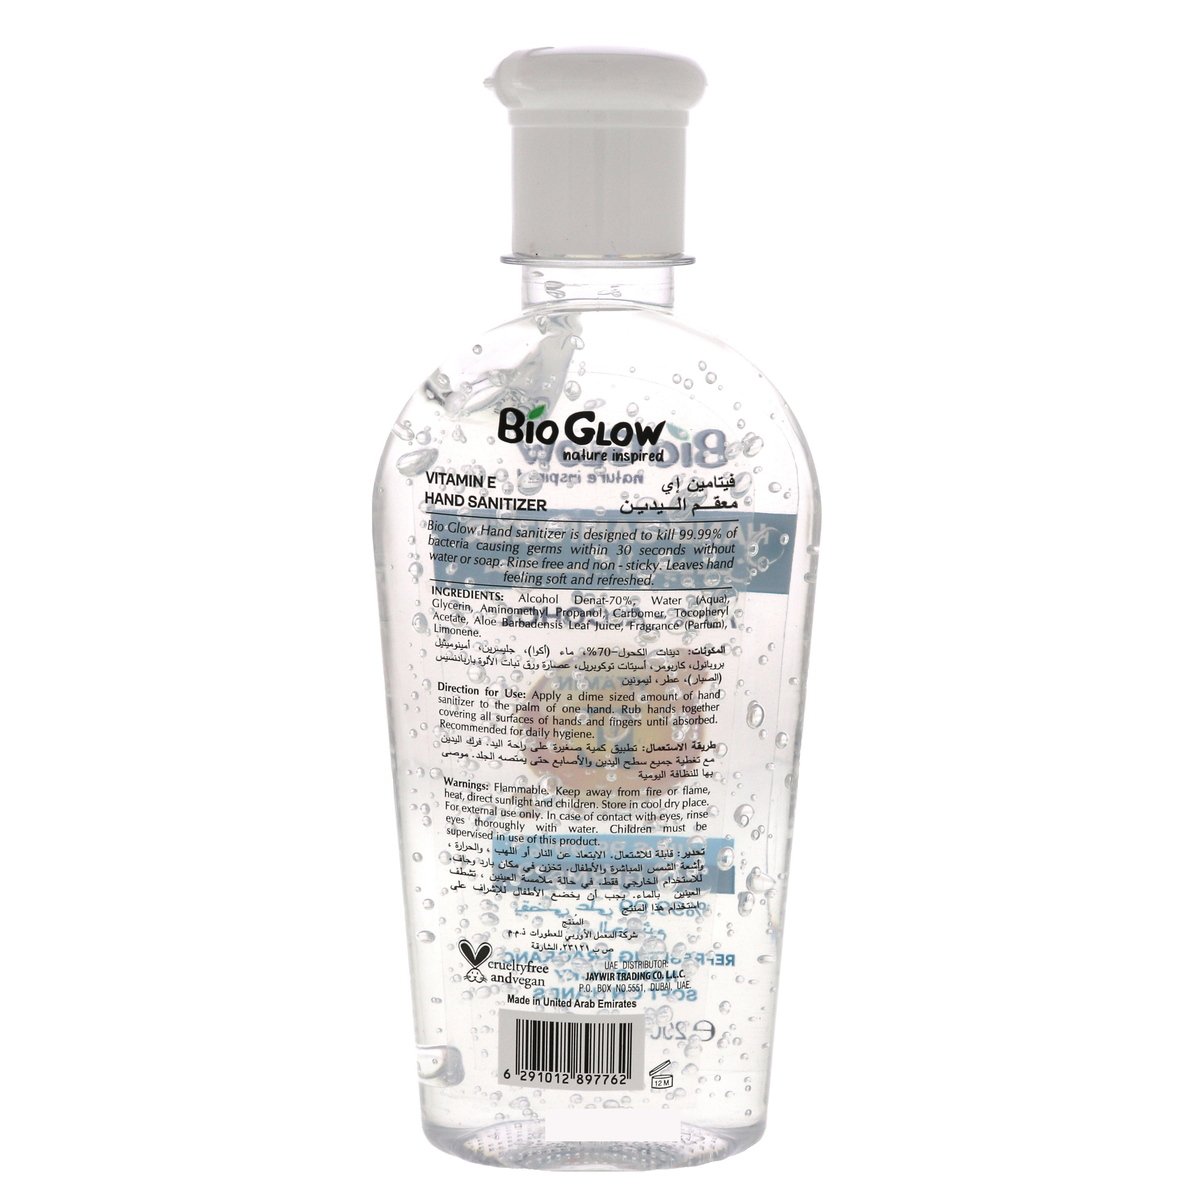 Bio Glow Hand Sanitizer Vitamin E 200 ml